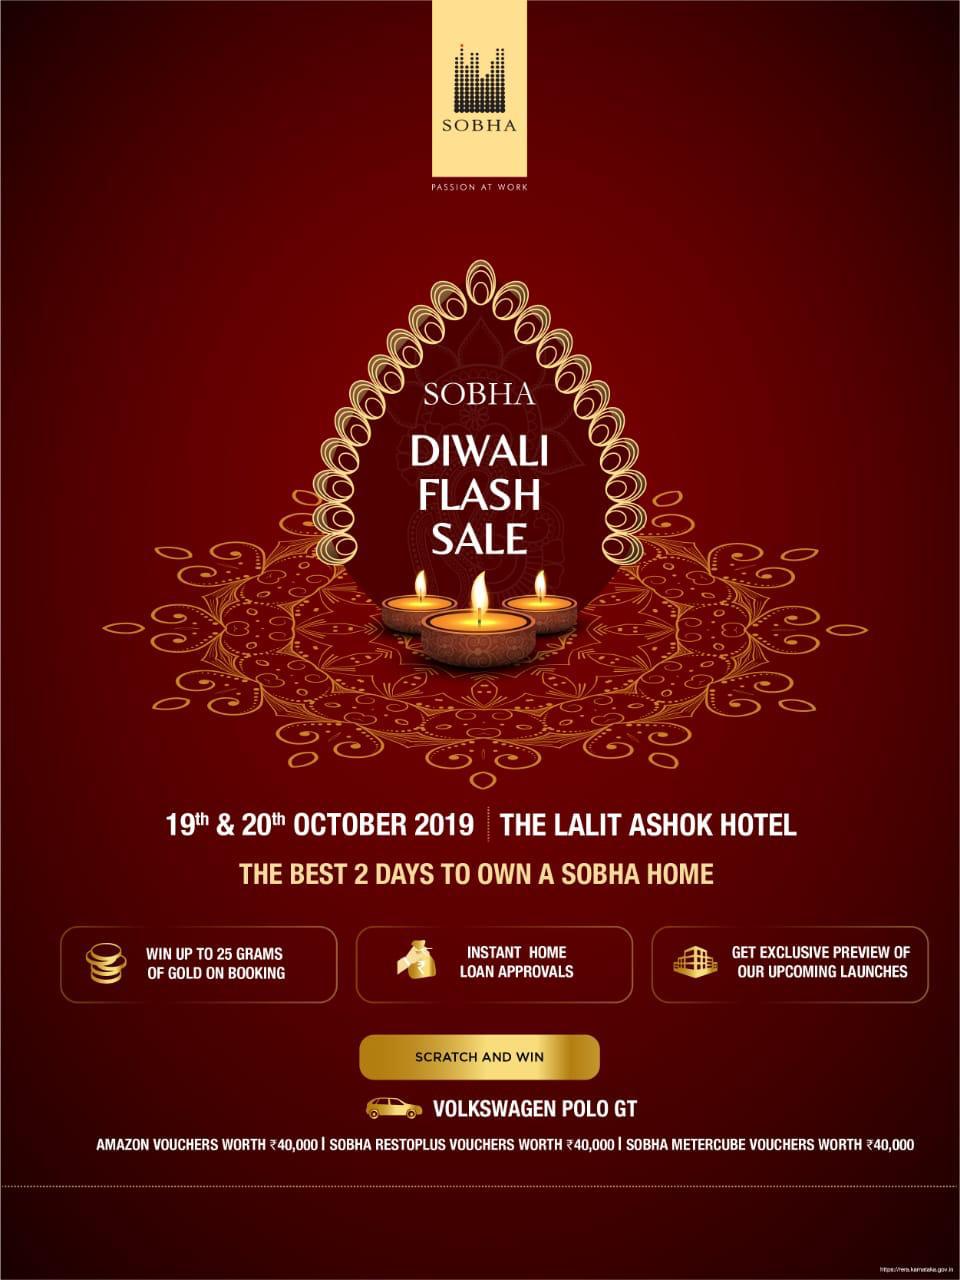 Sobha Home Diwali Flash Sale 